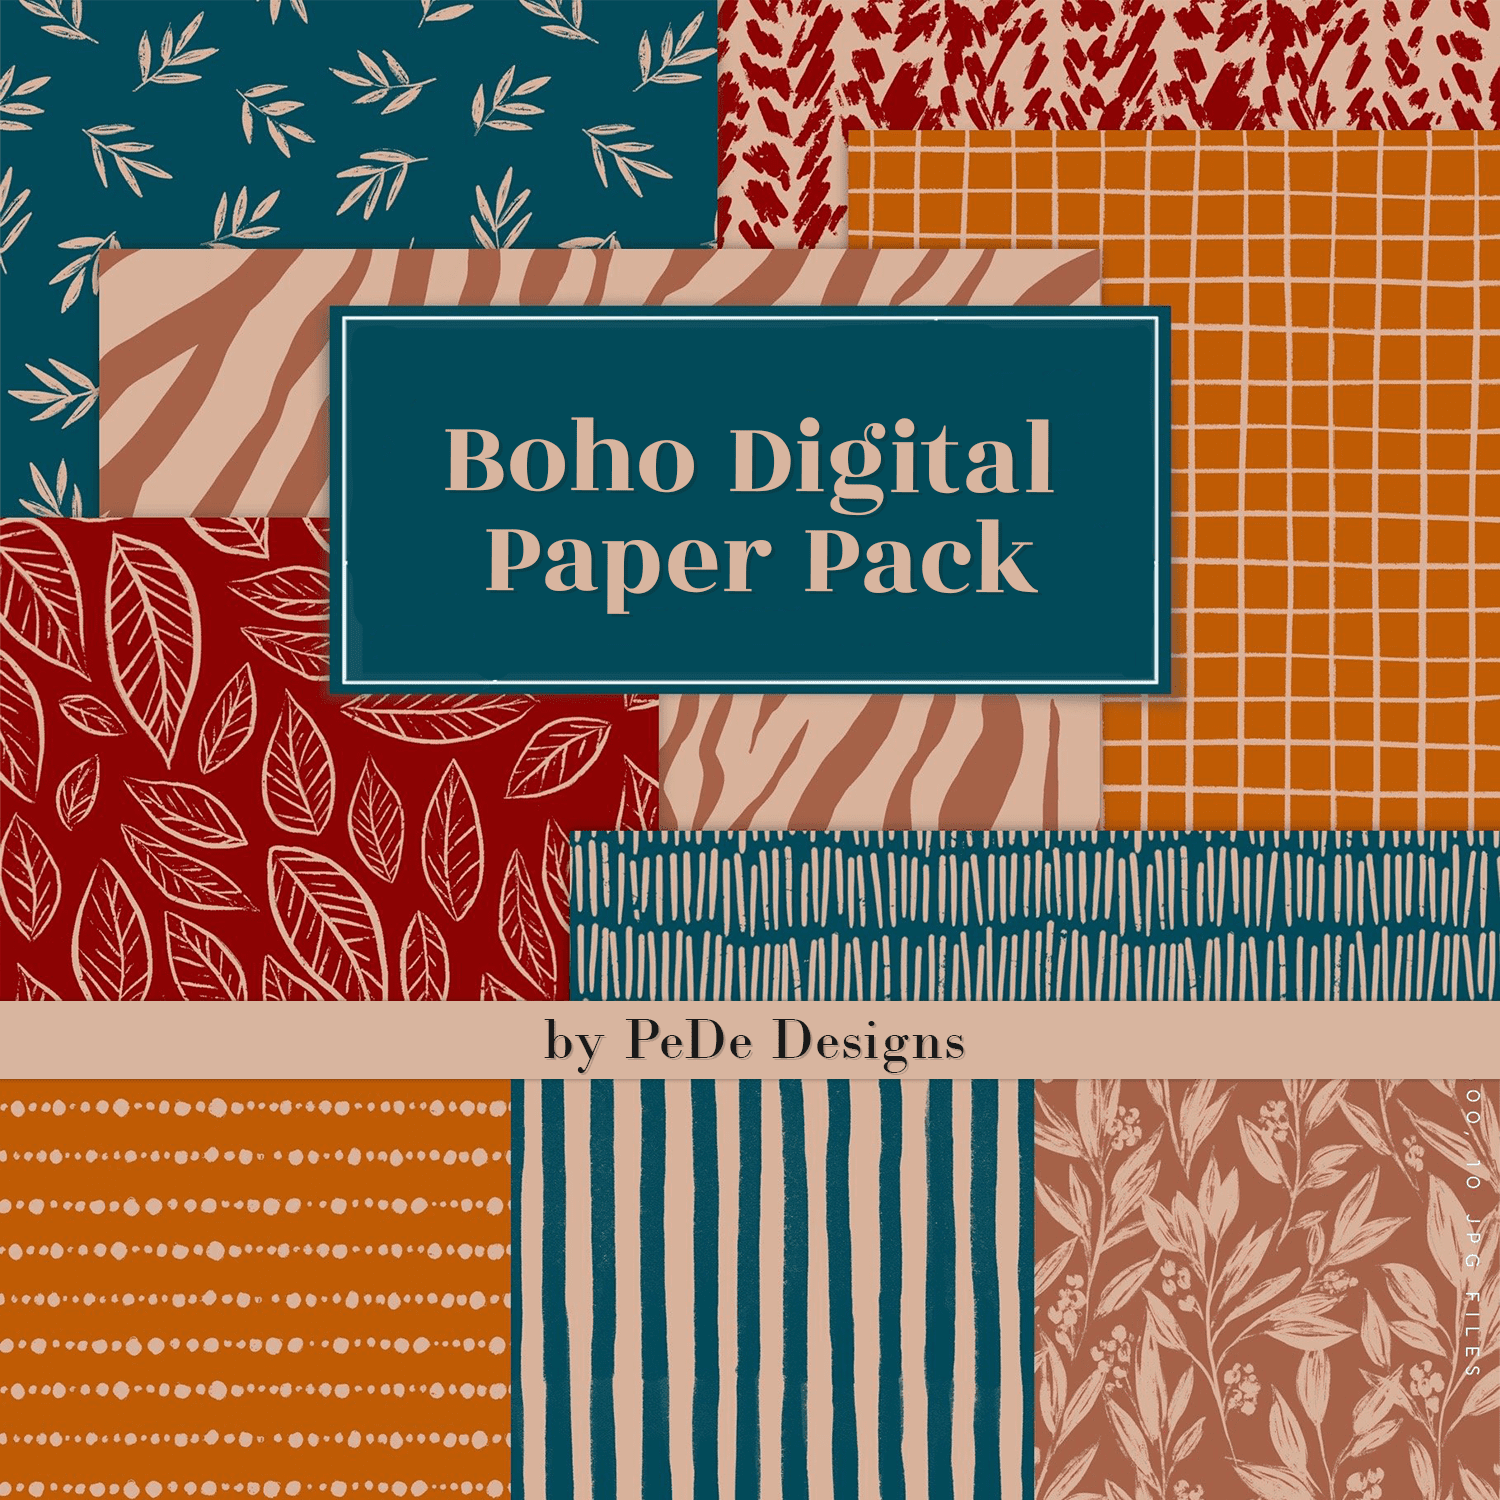 Boho Digital Paper Pack cover.